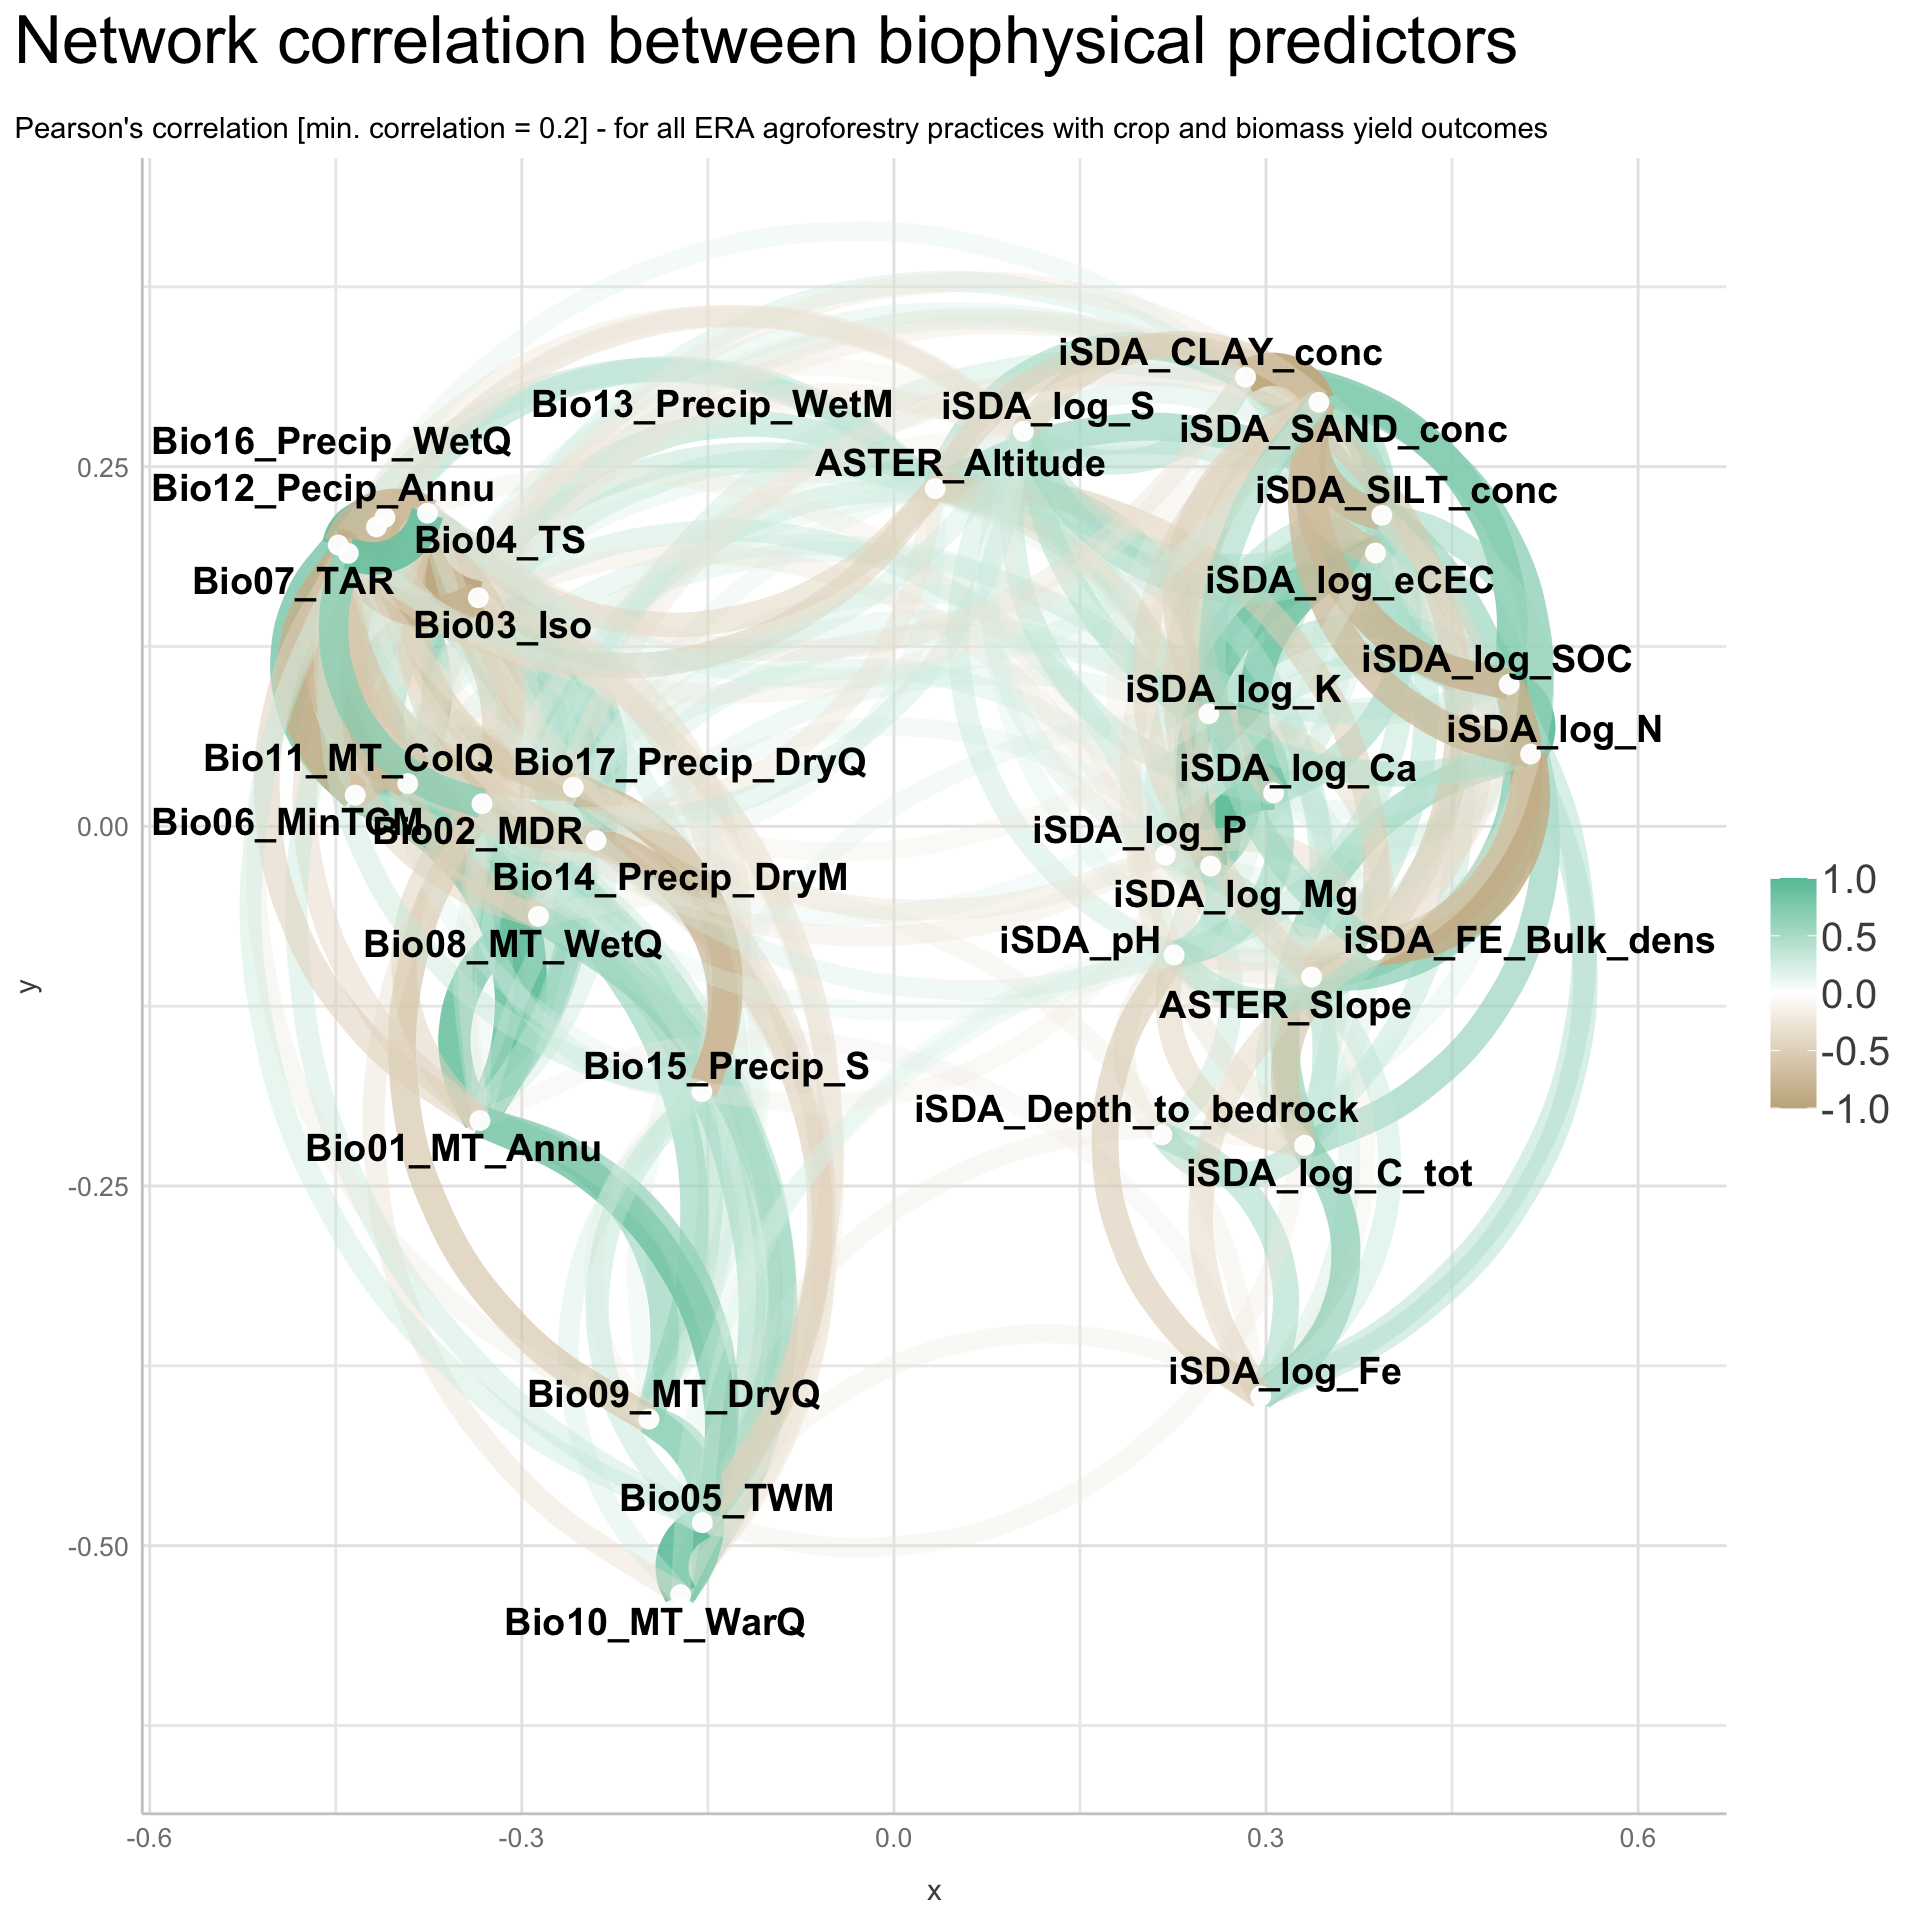 Network correlation plot between biophysical predictors and logRR